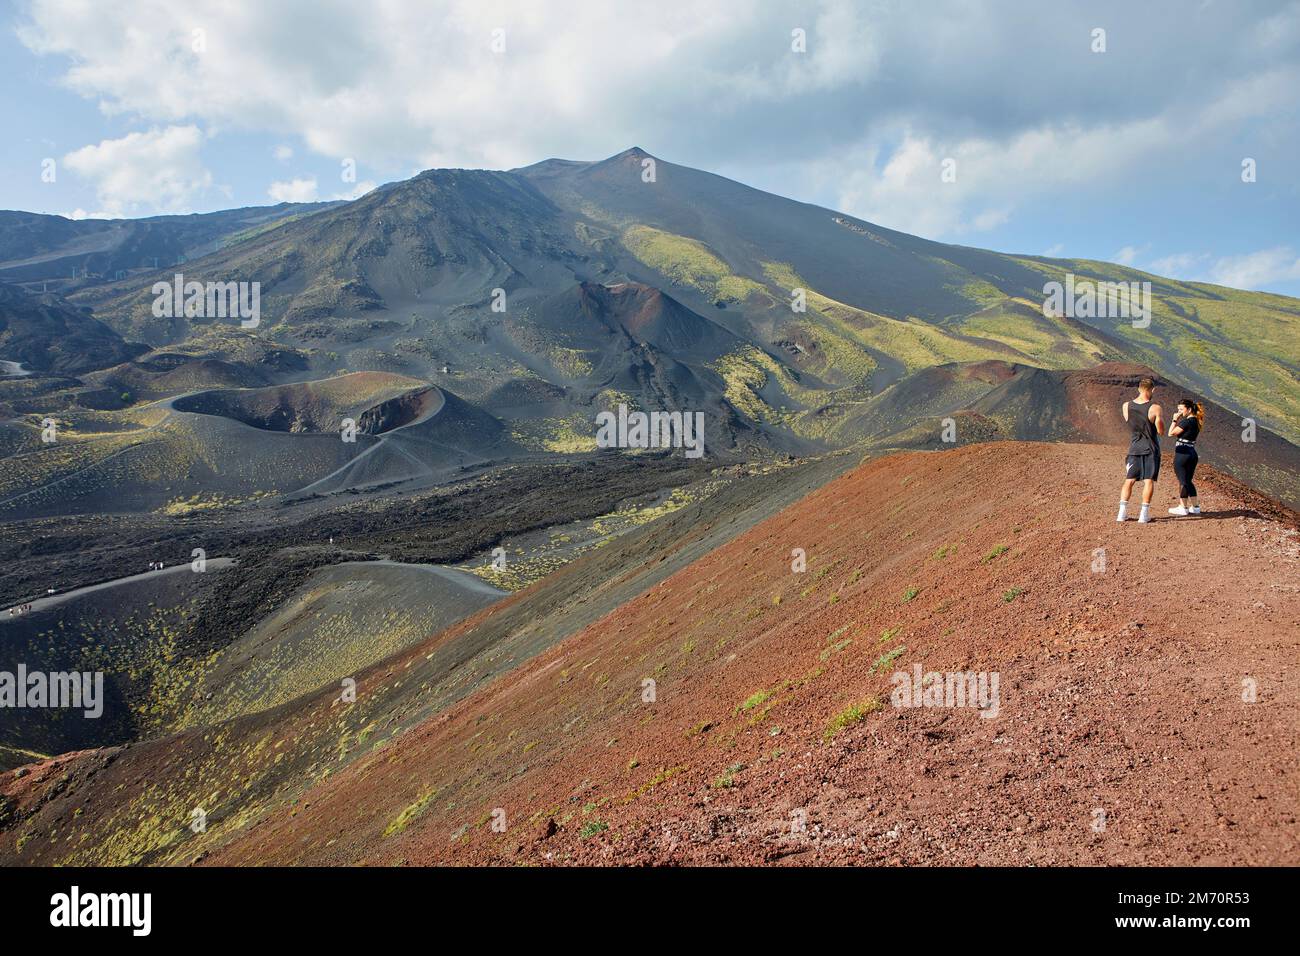 Minor crater of Etna volcano, Sicily, Italy Stock Photo